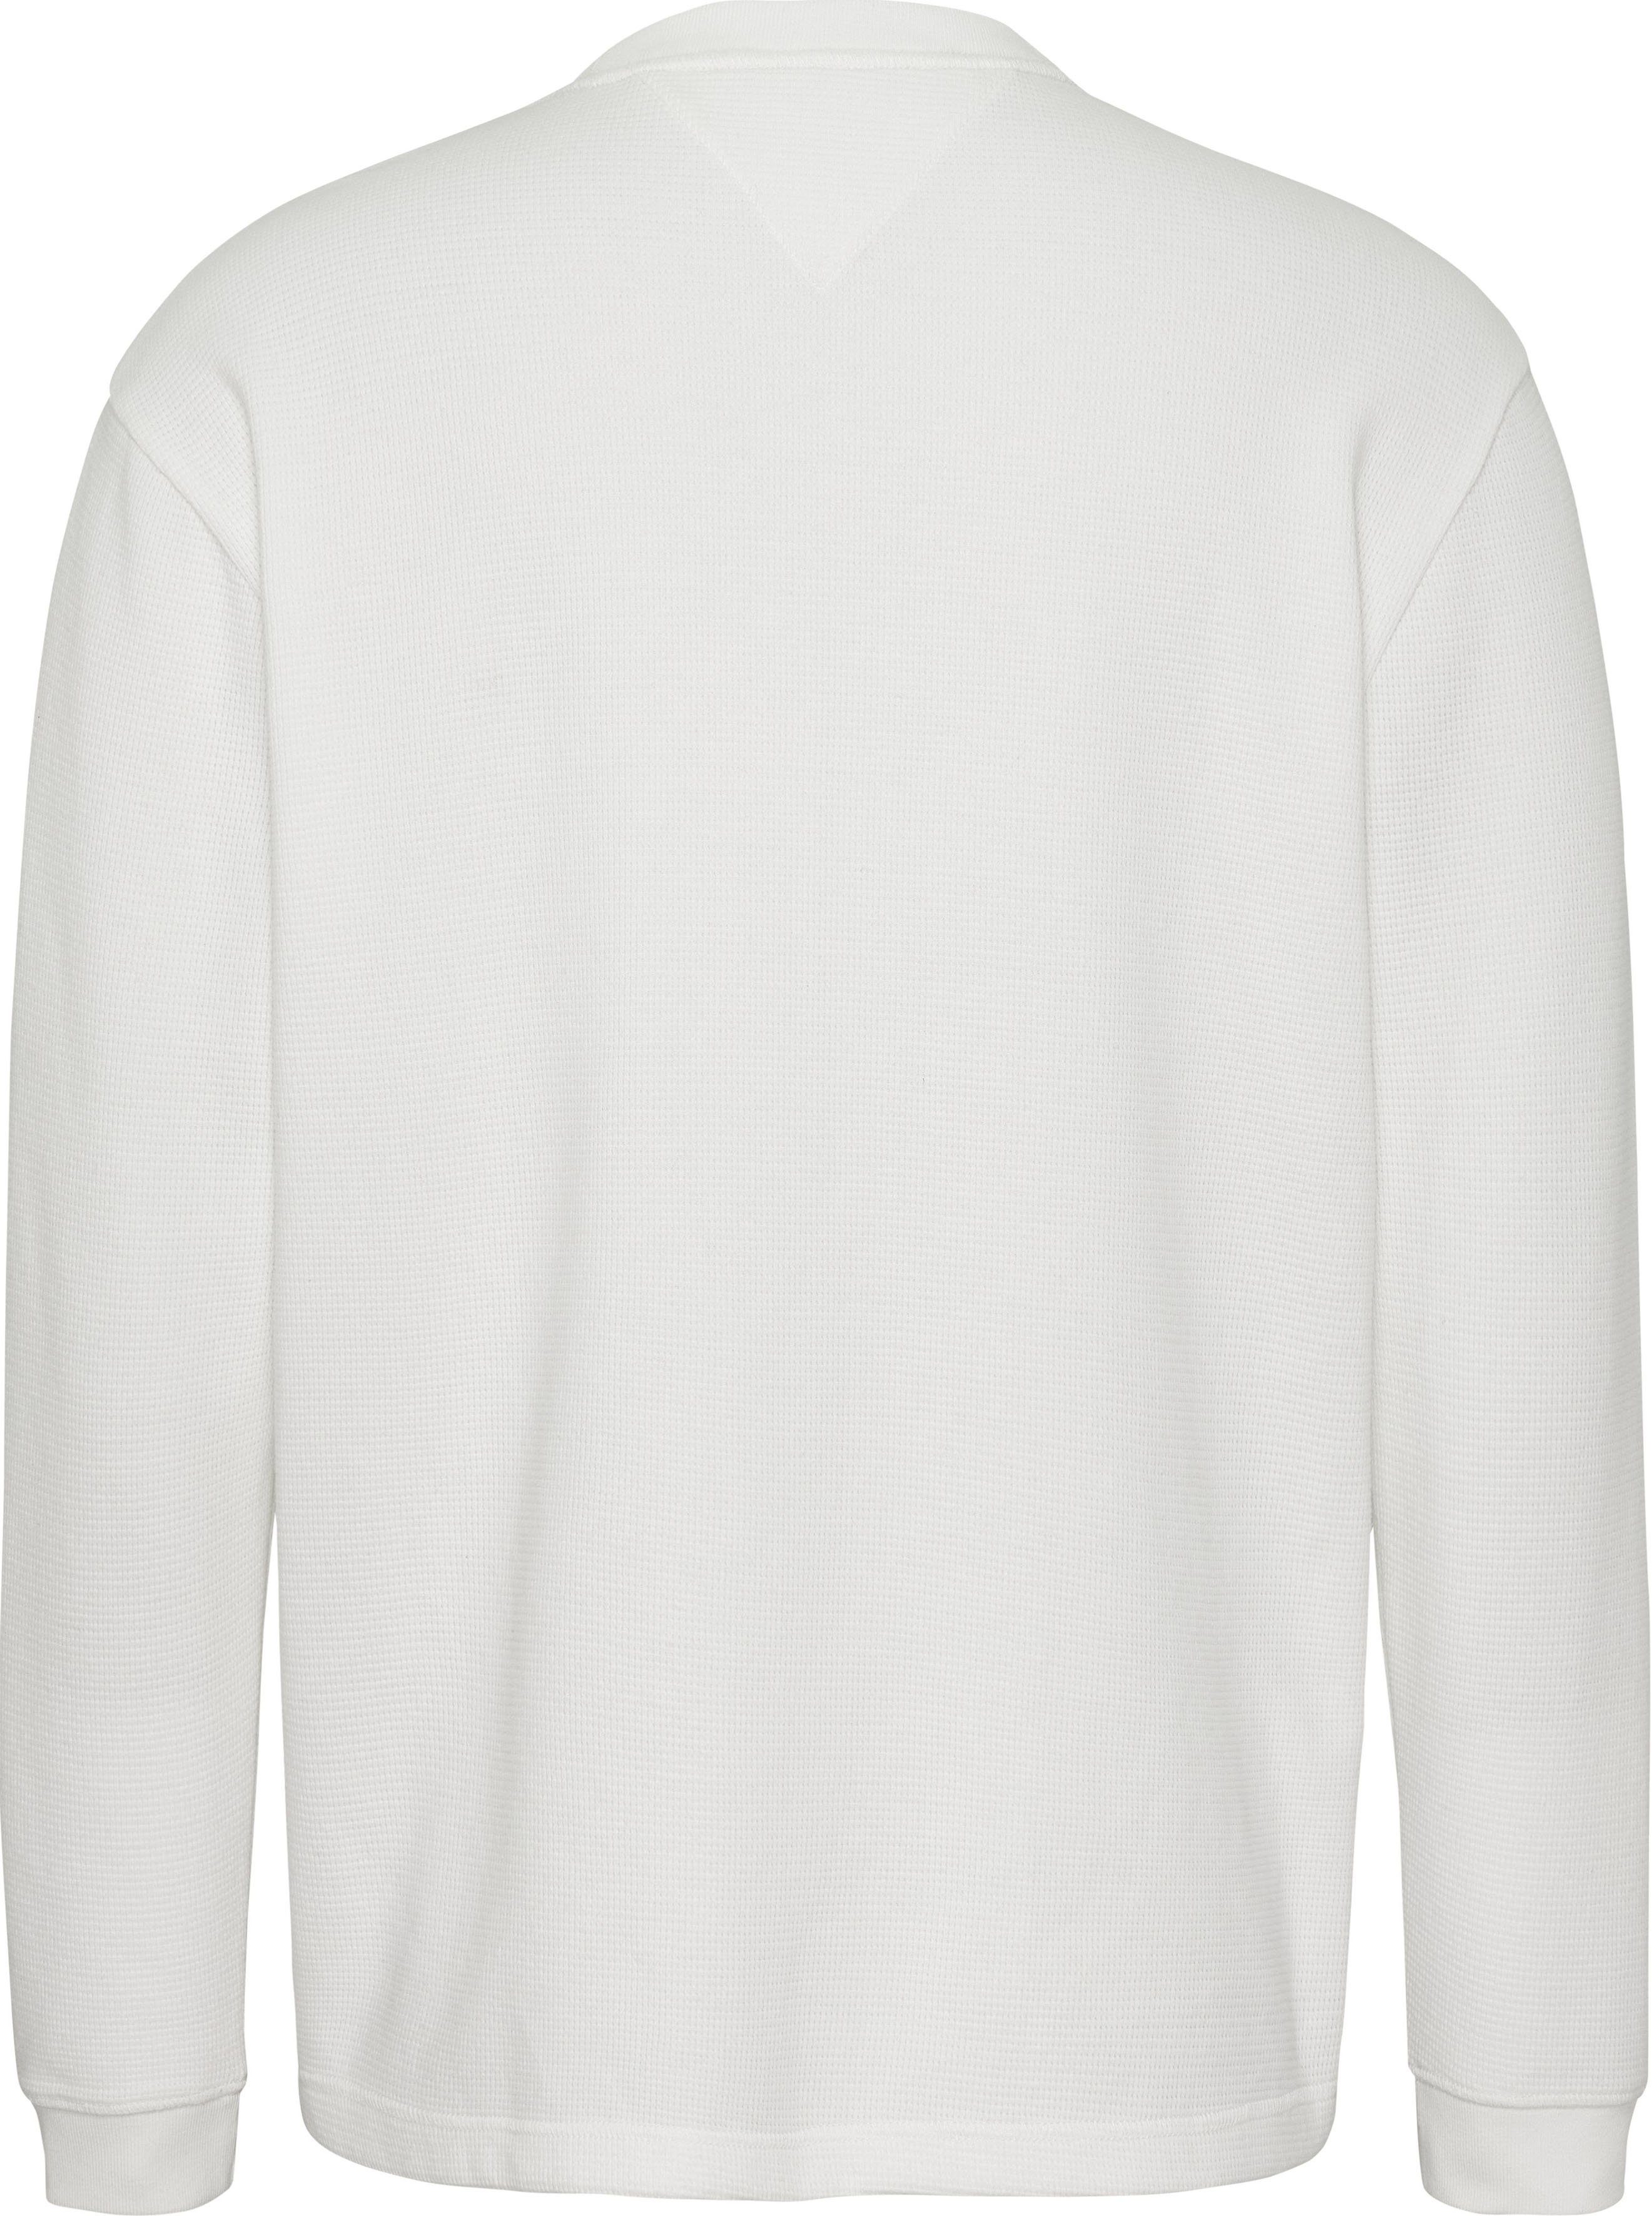 TJM White SOFT Langarmshirt mit LS CLSC SNIT Tommy Jeans Markenlabel